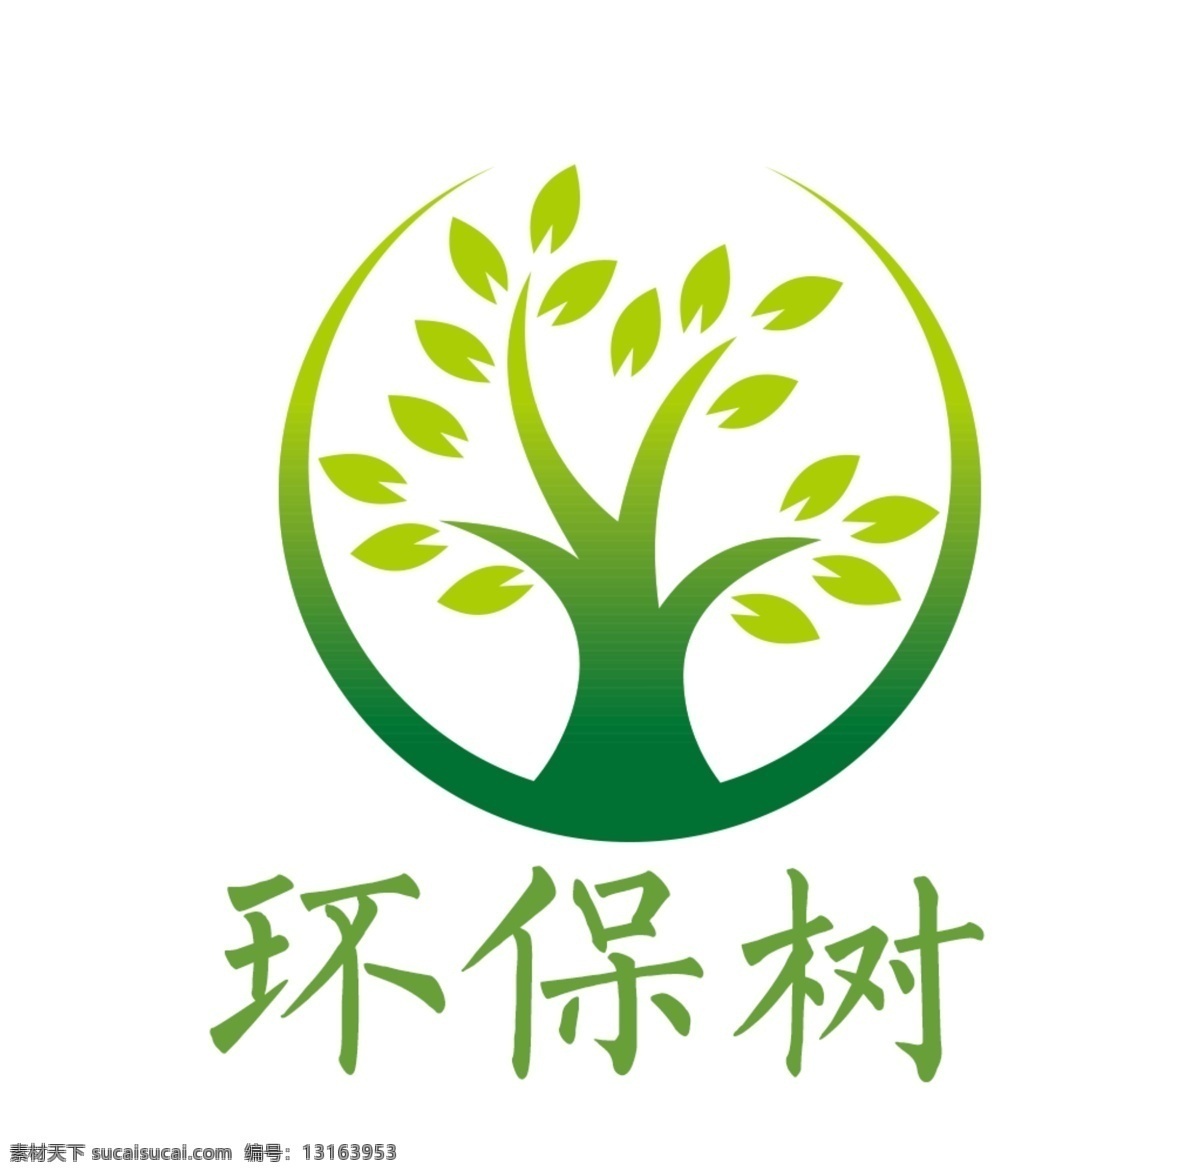 环保 树 treelogo tree logo 矢量图